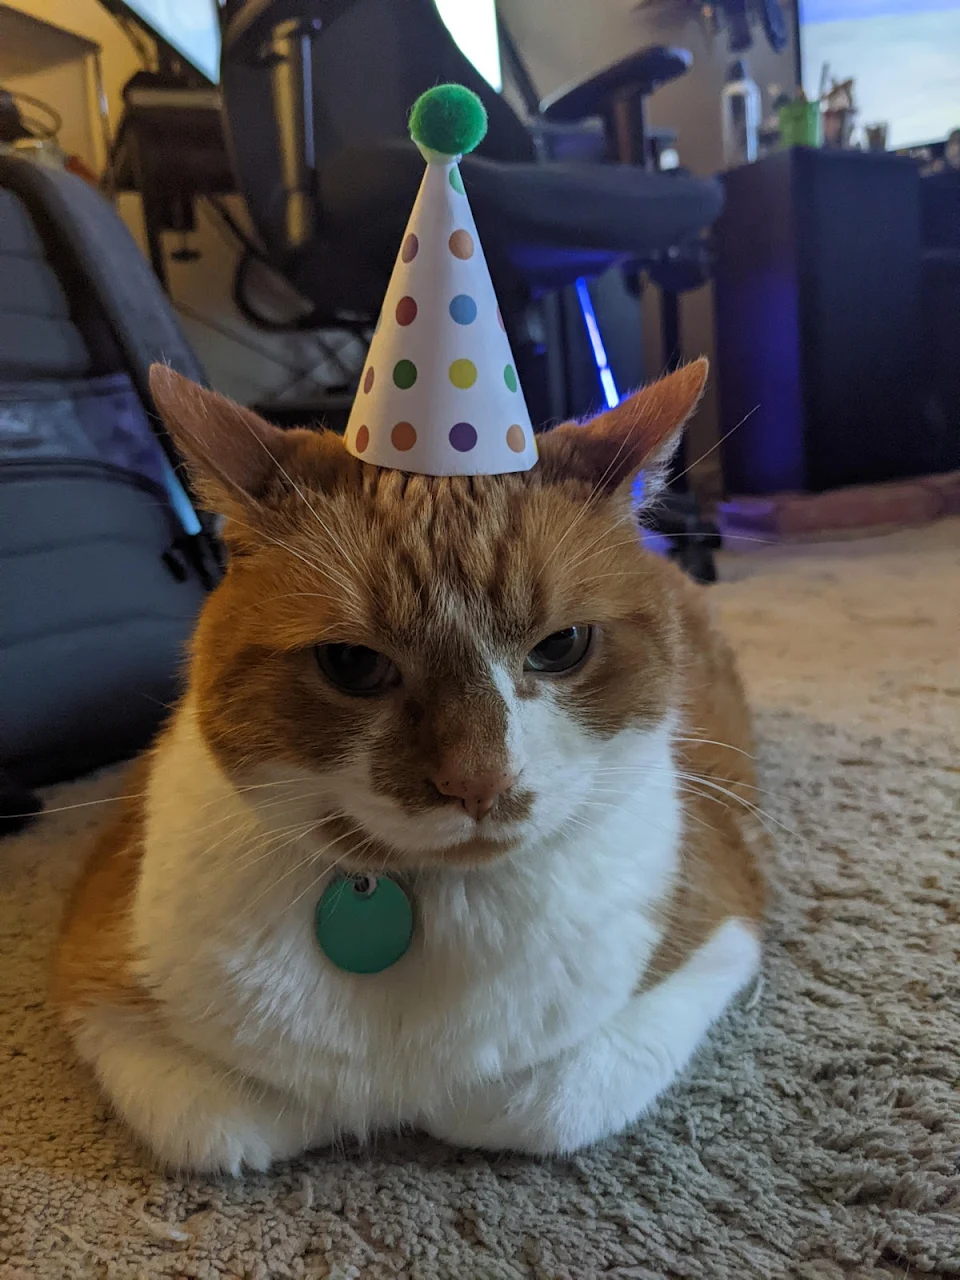 It's his 10th birthday!